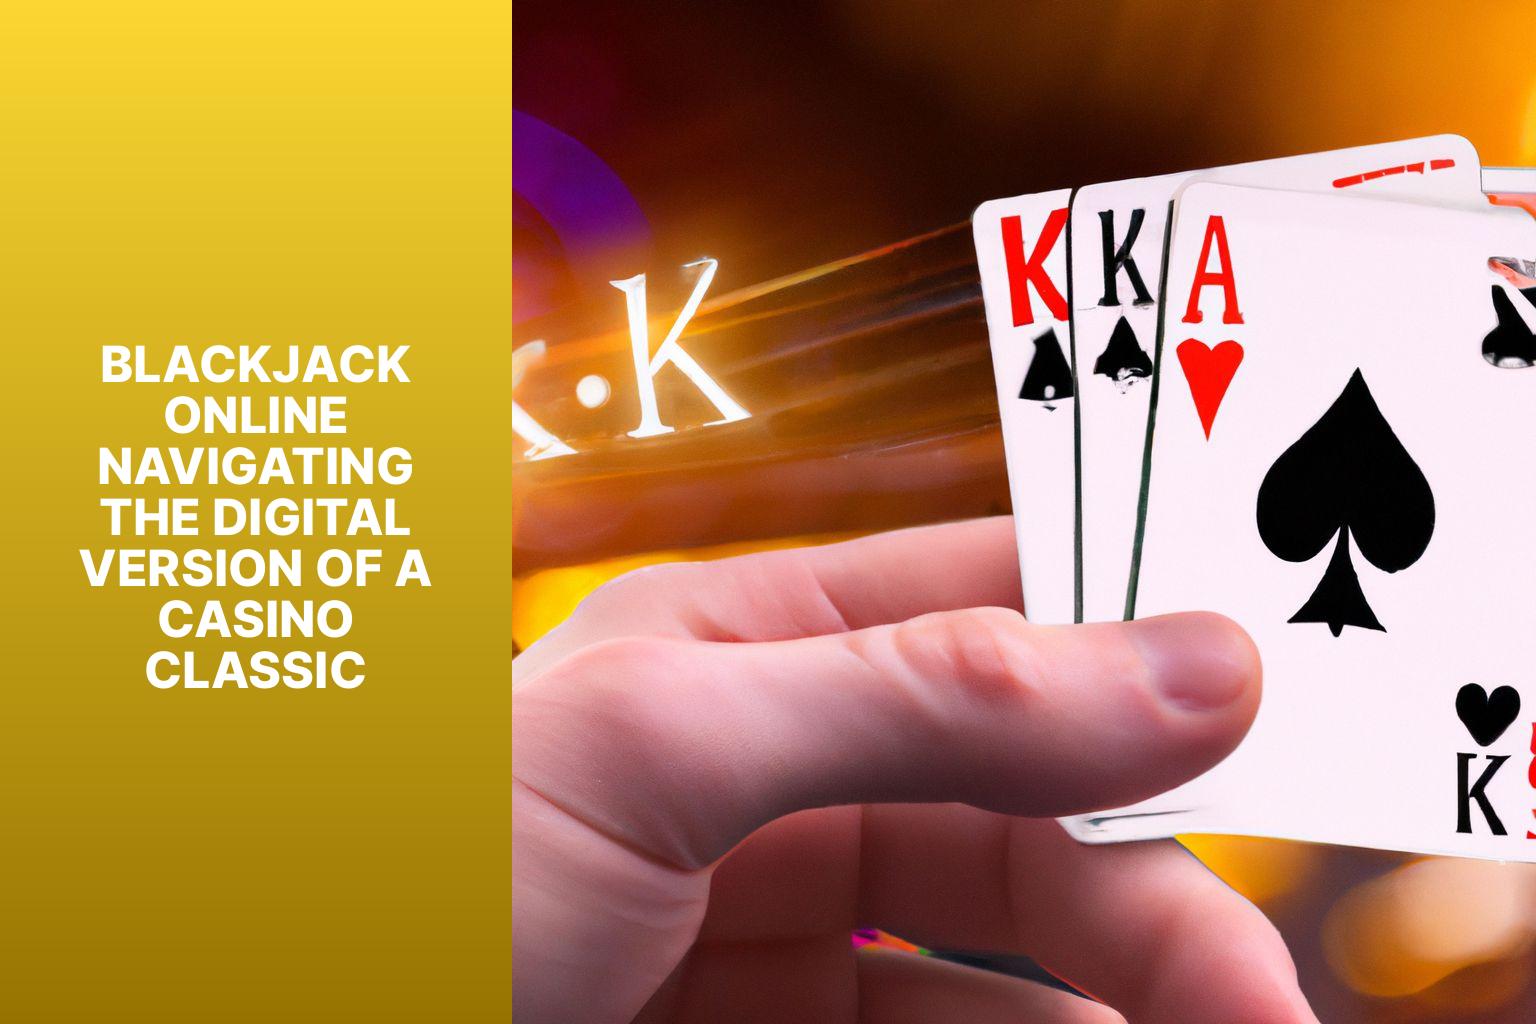 Blackjack Online Navigating the Digital Version of a Casino Classic